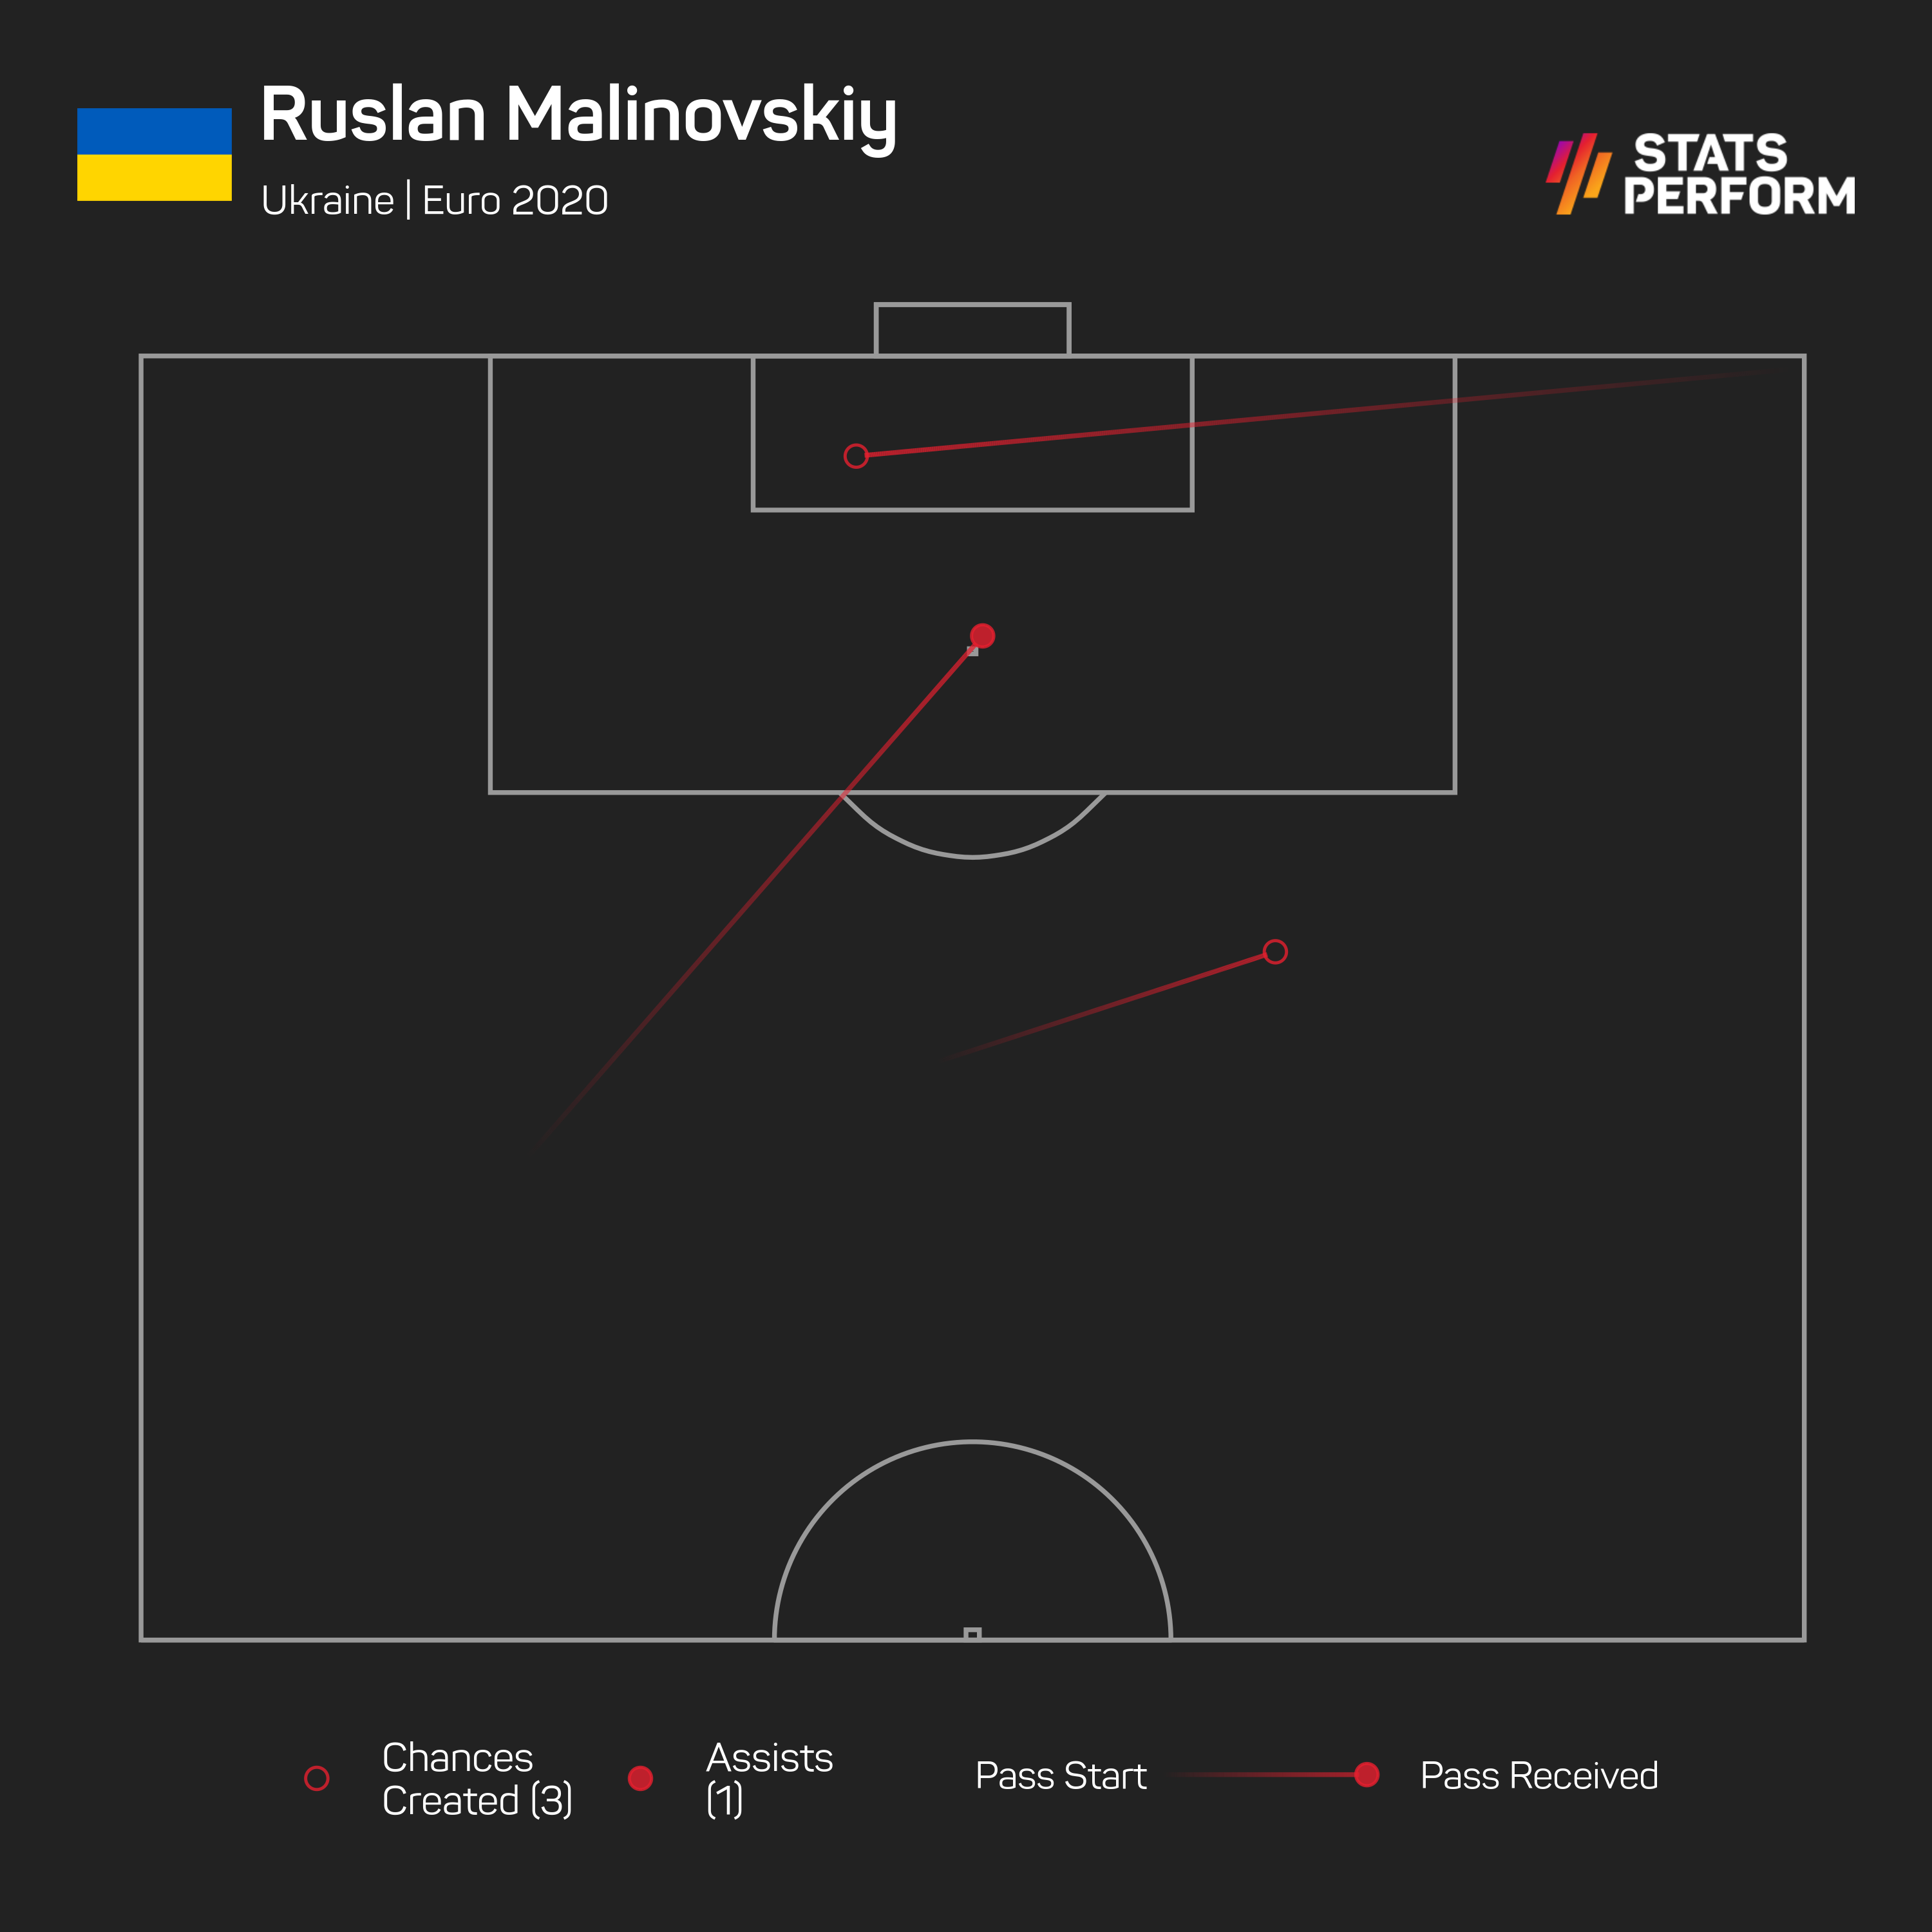 Malinovskiy made three key passes against the Netherlands